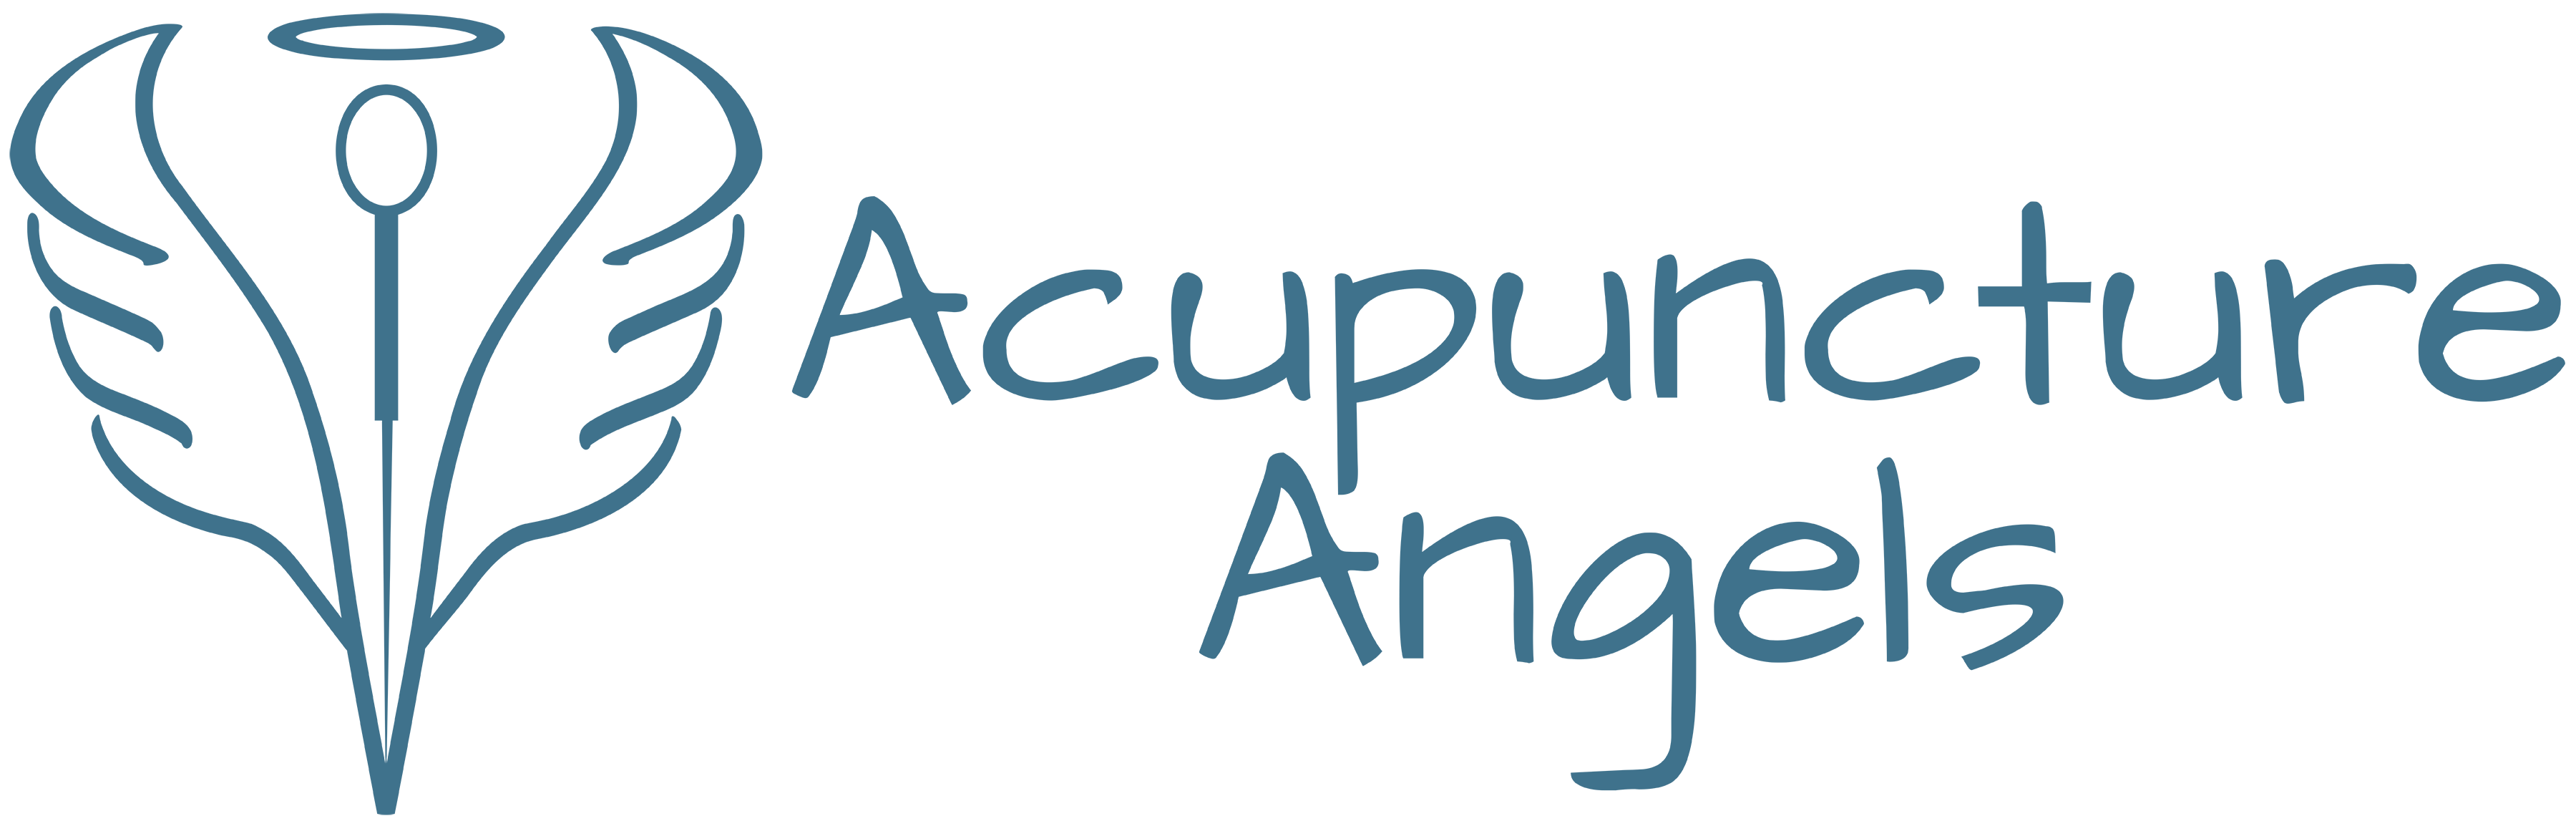 acupuncture angels logo_horizontal